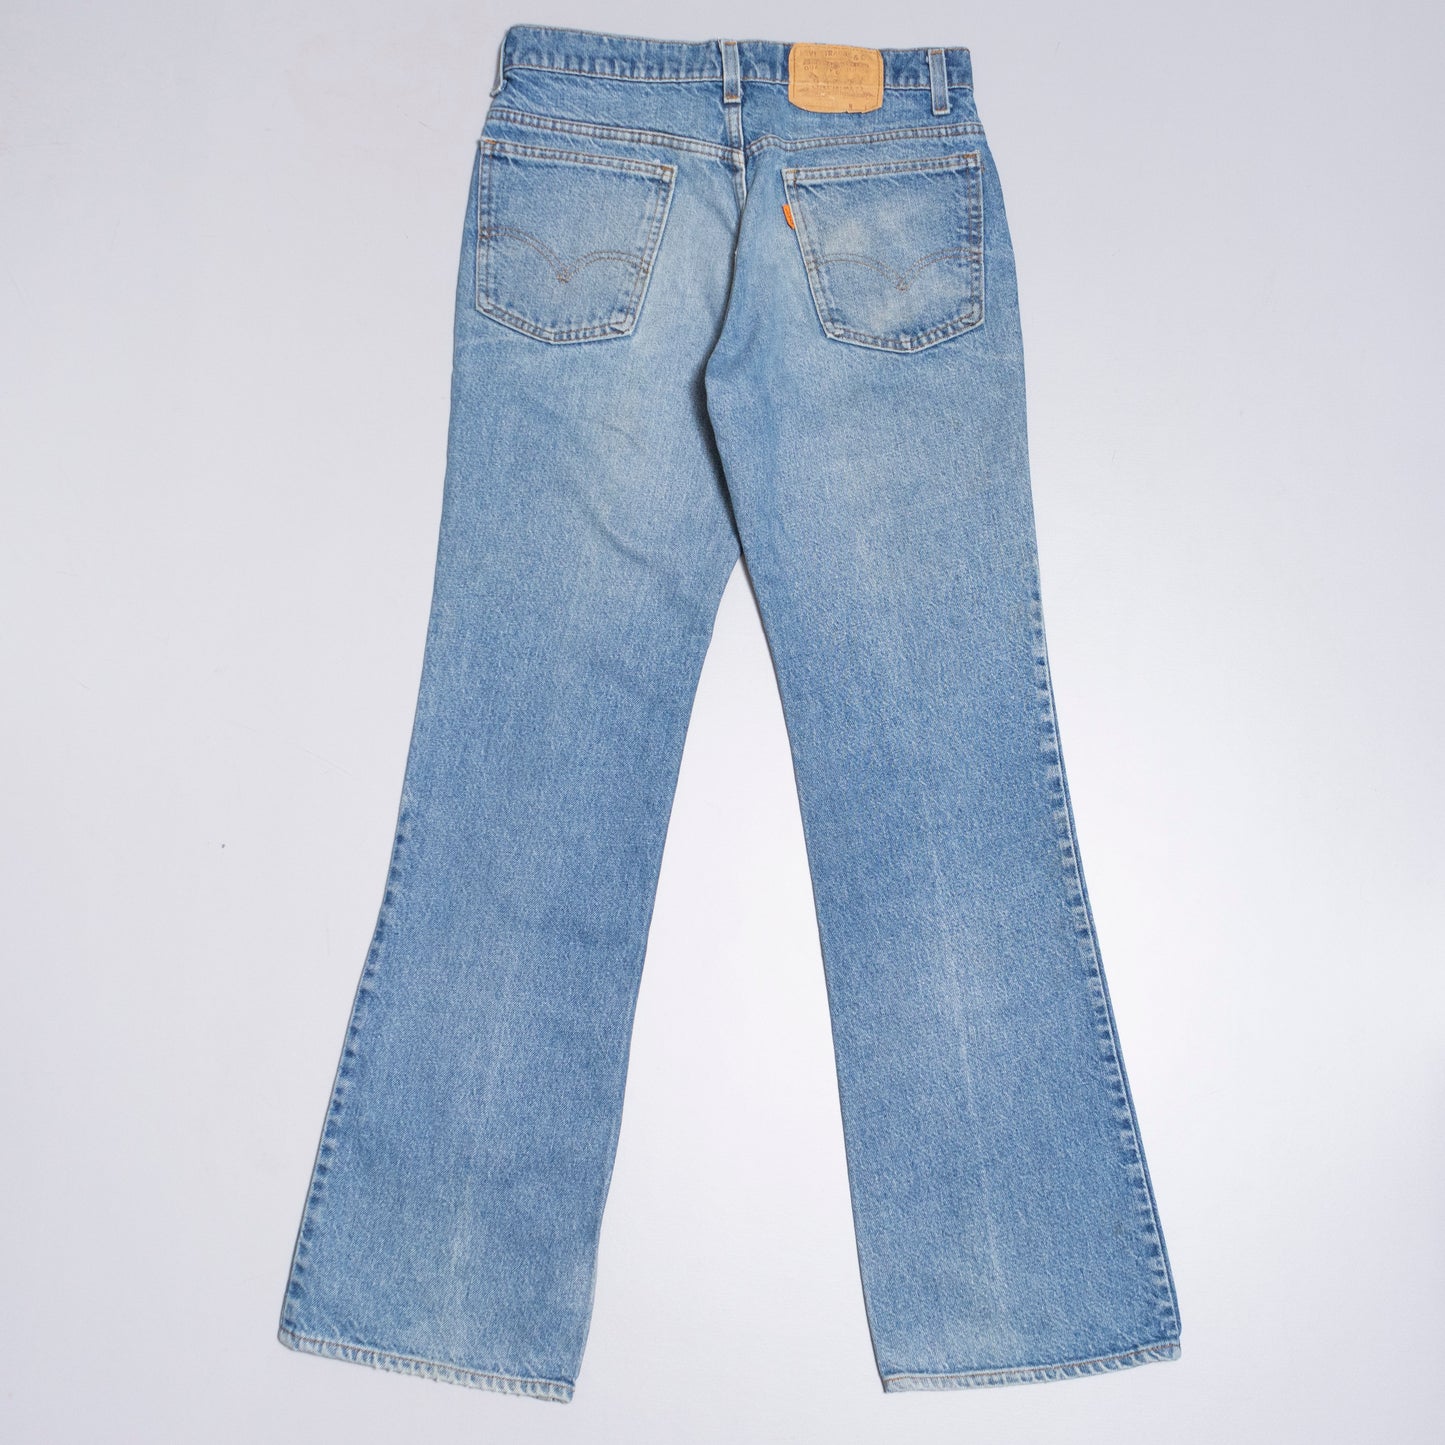 Levis Orange Tab Jeans, 32/34